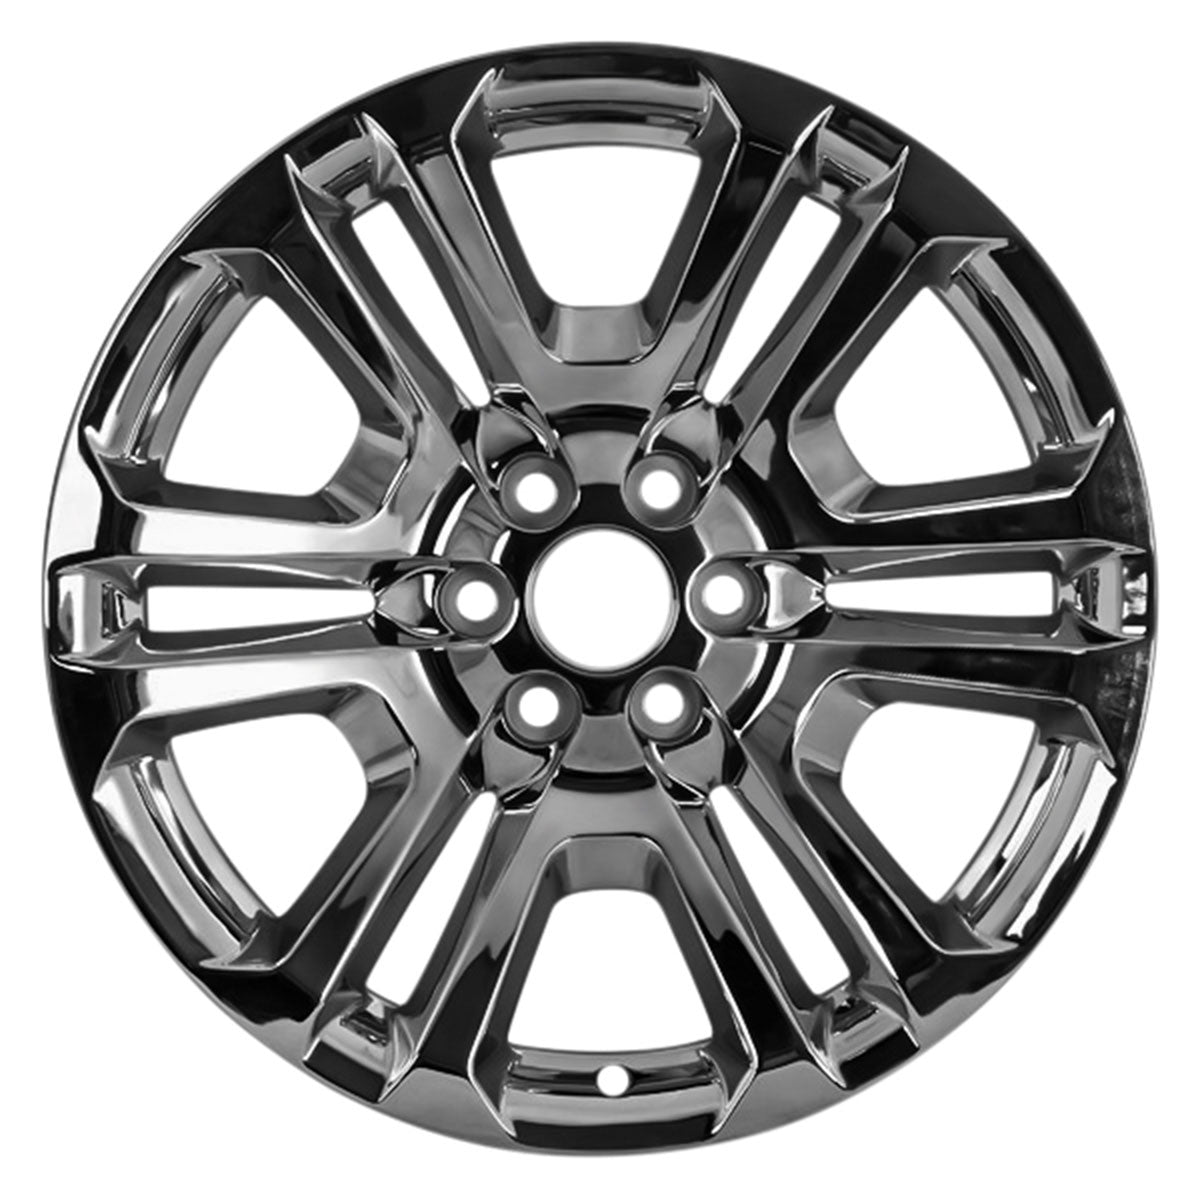 2014 Chevrolet Silverado 1500 New 22" Replacement Wheel Rim RW4741CHR